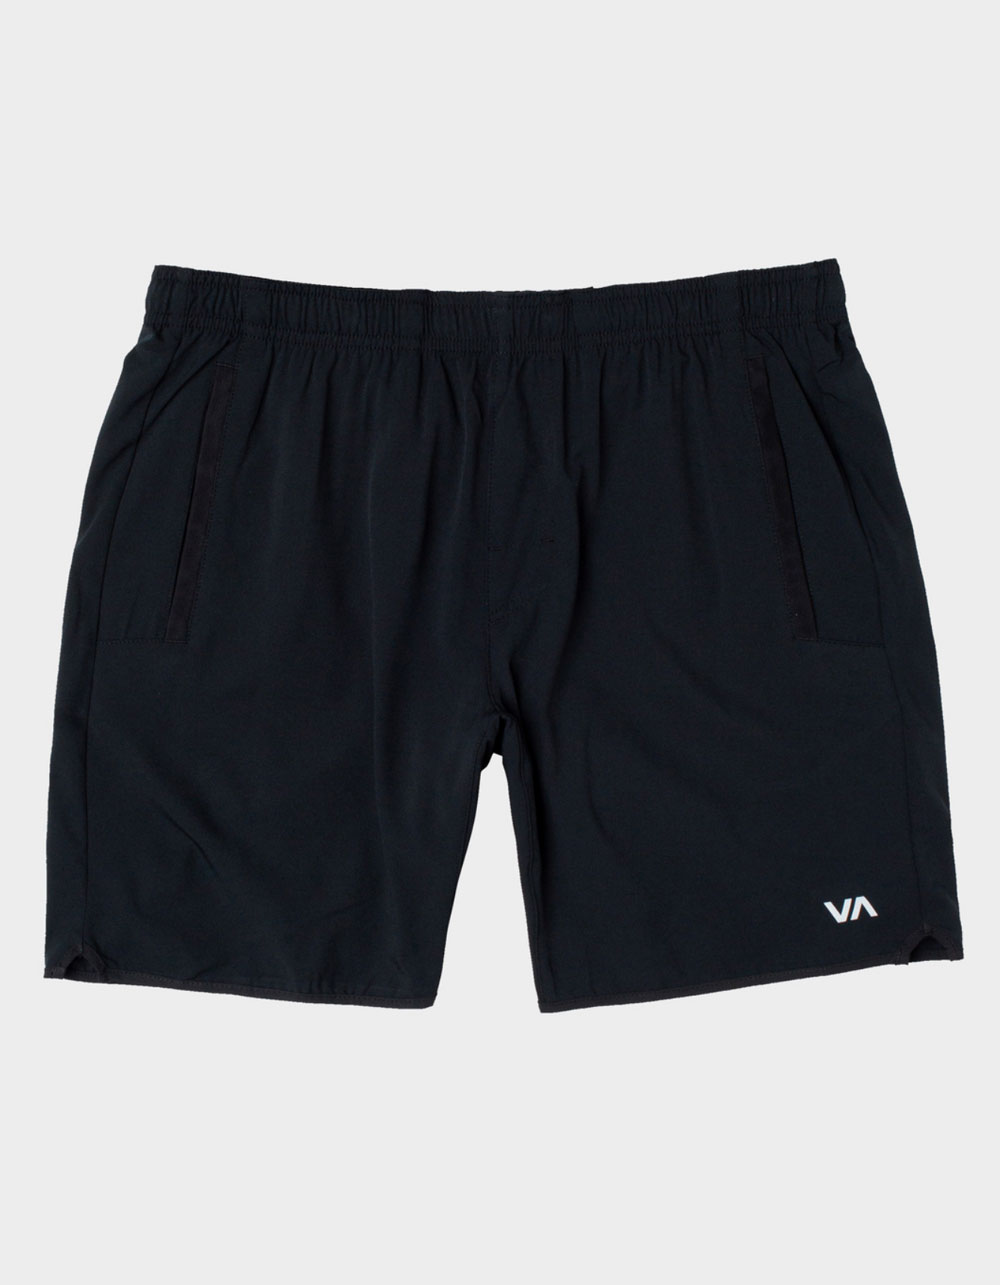 RVCA Yogger Stretch Mens 17" Athletic Shorts